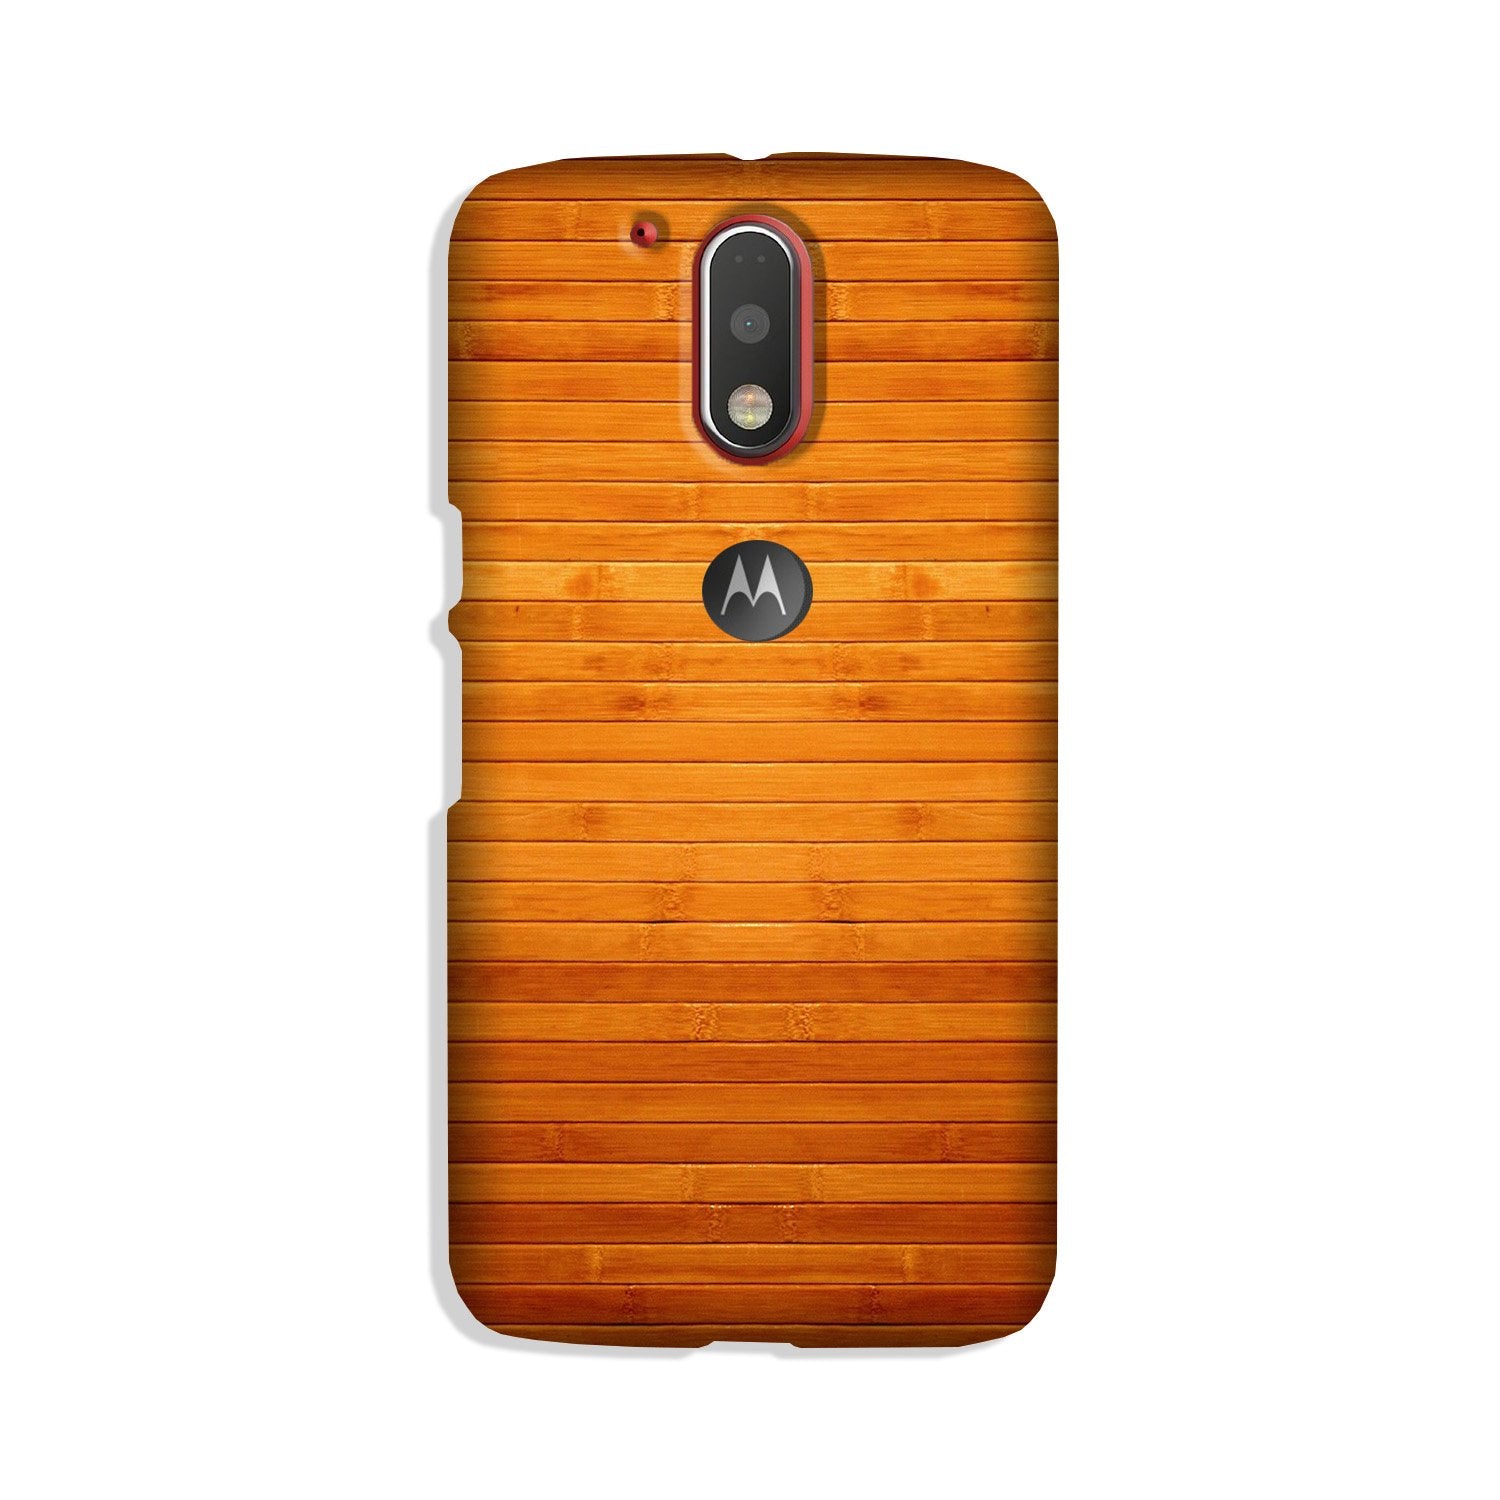 Wooden Look Case for Moto G4 Plus  (Design - 111)